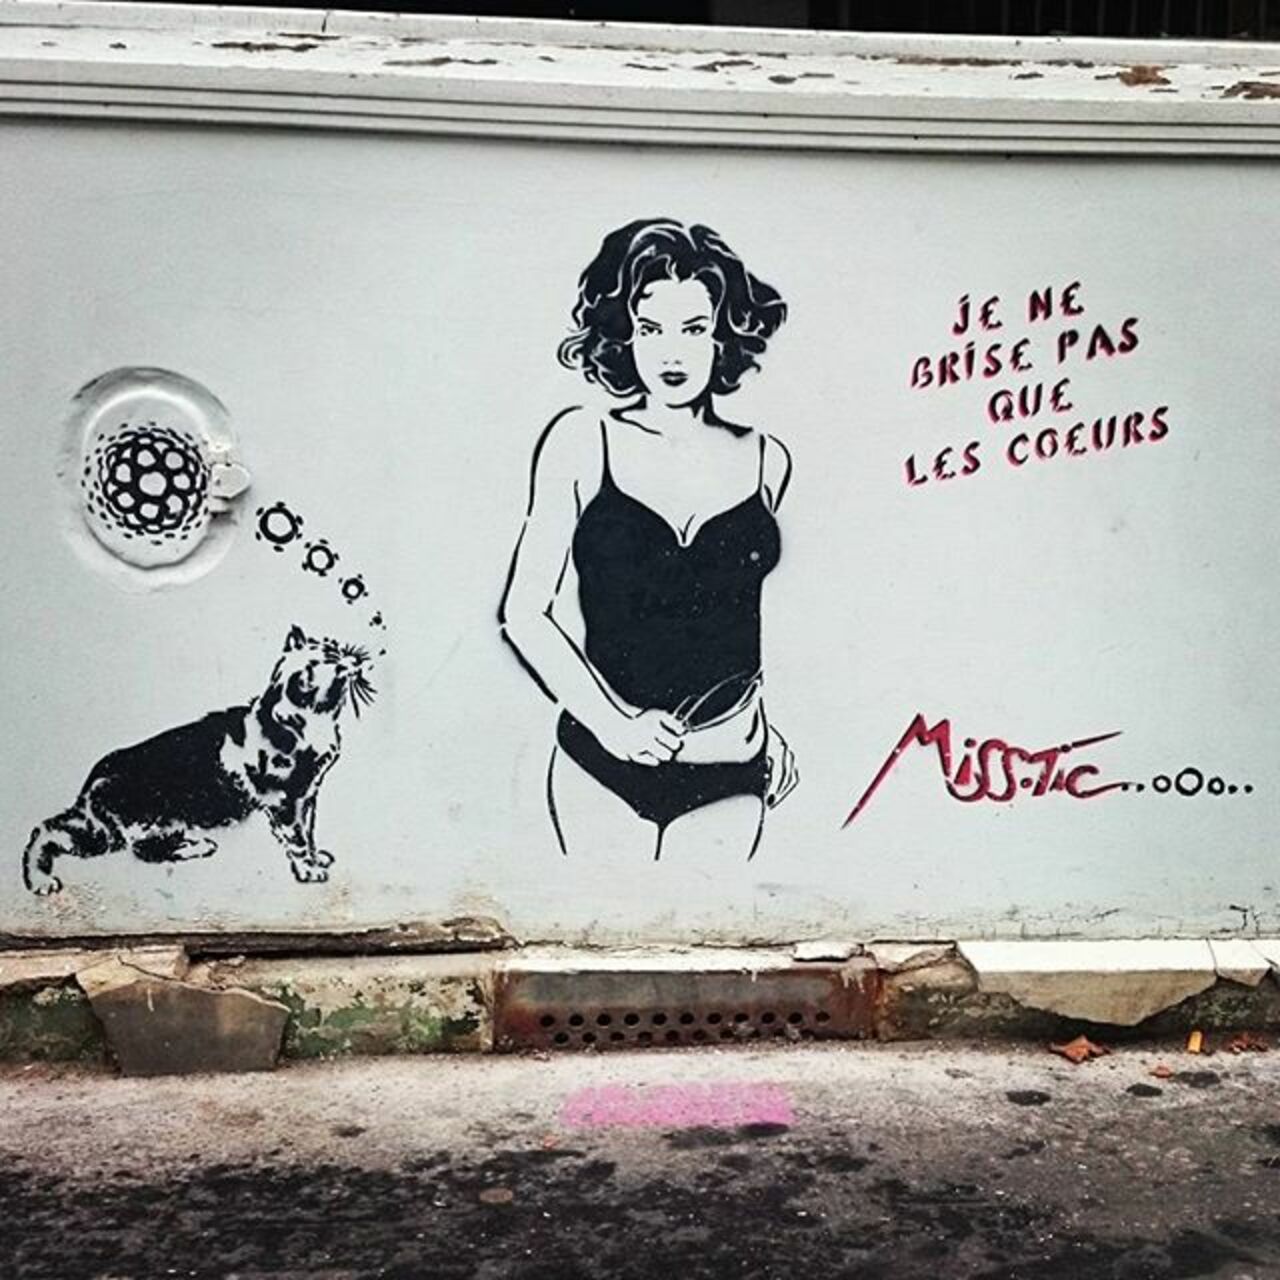 #75011 #Instagram - http://mystreetart.paris/je-ne-brise-pas-que-les-coeursartiste-misstic/ #MyStreetArtParis #streetart #love #graffiti https://t.co/5zCACIfAoE